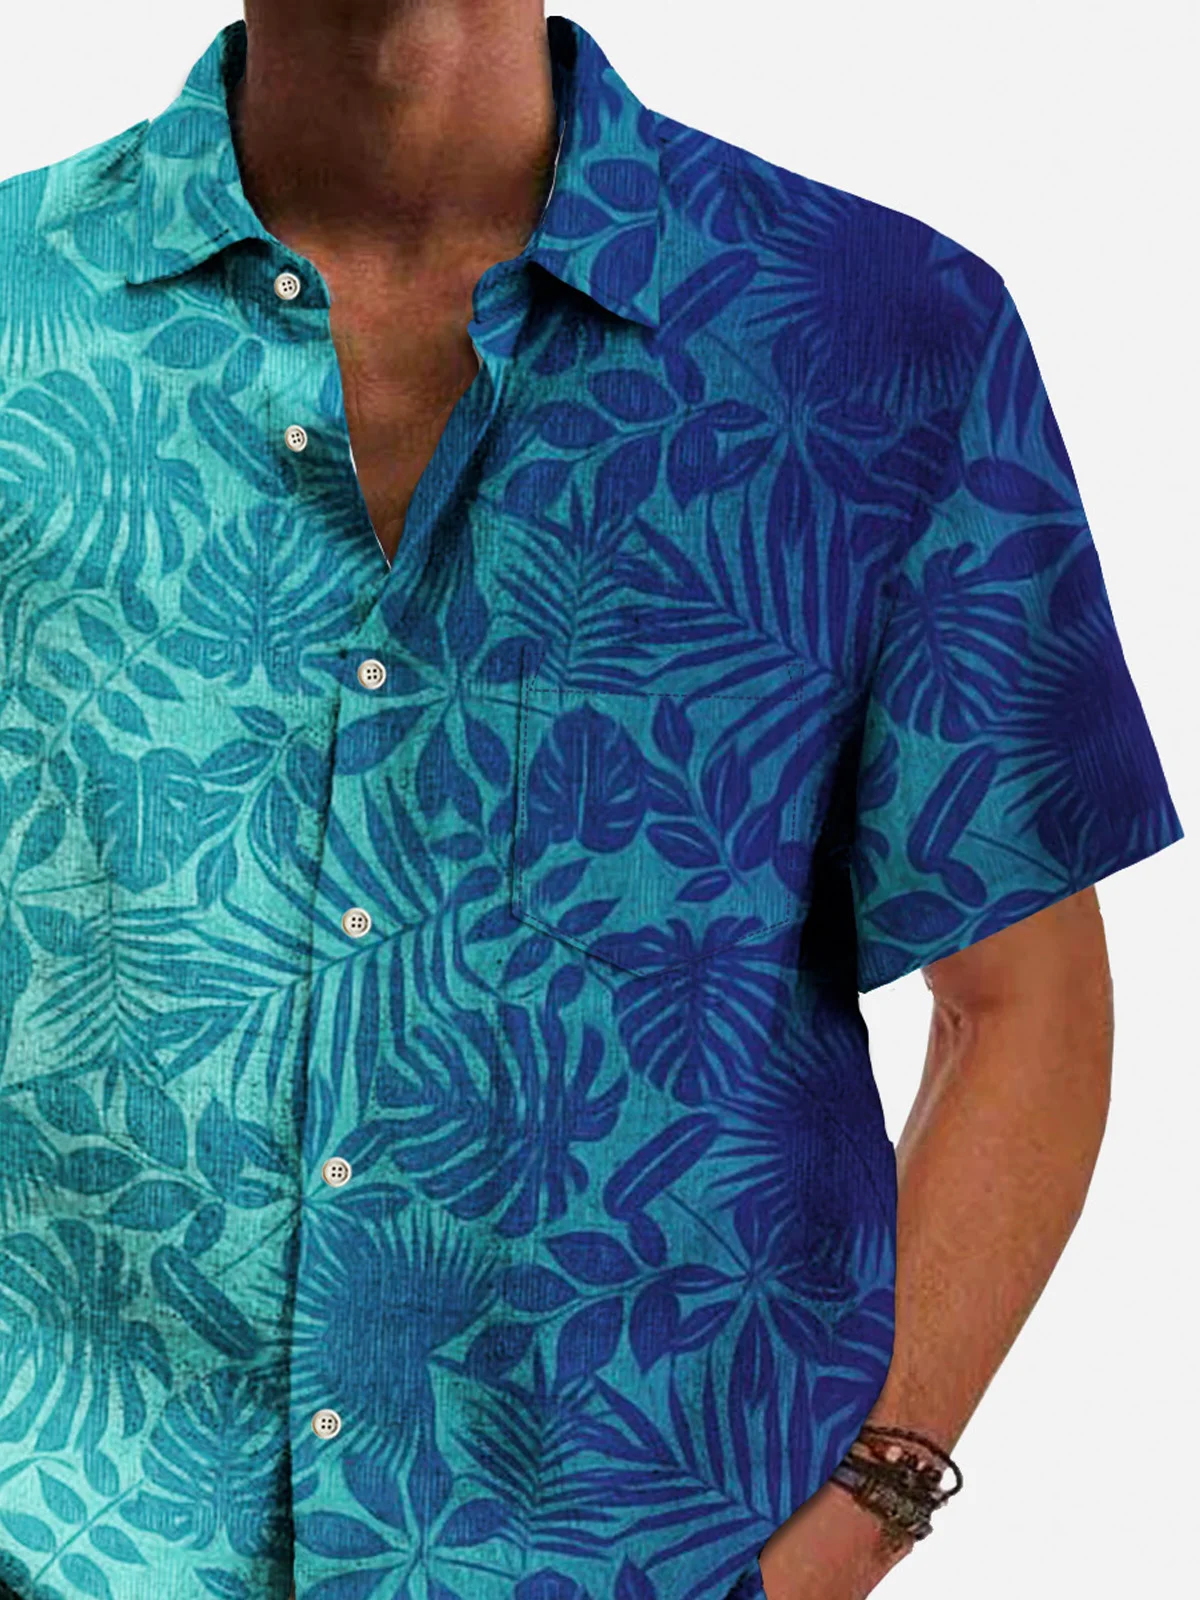 Royaura® Beach Vacation Men's Hawaiian Shirt Tropical Gradient Leaves Stretch Camp Pocket Shirt Big Tall